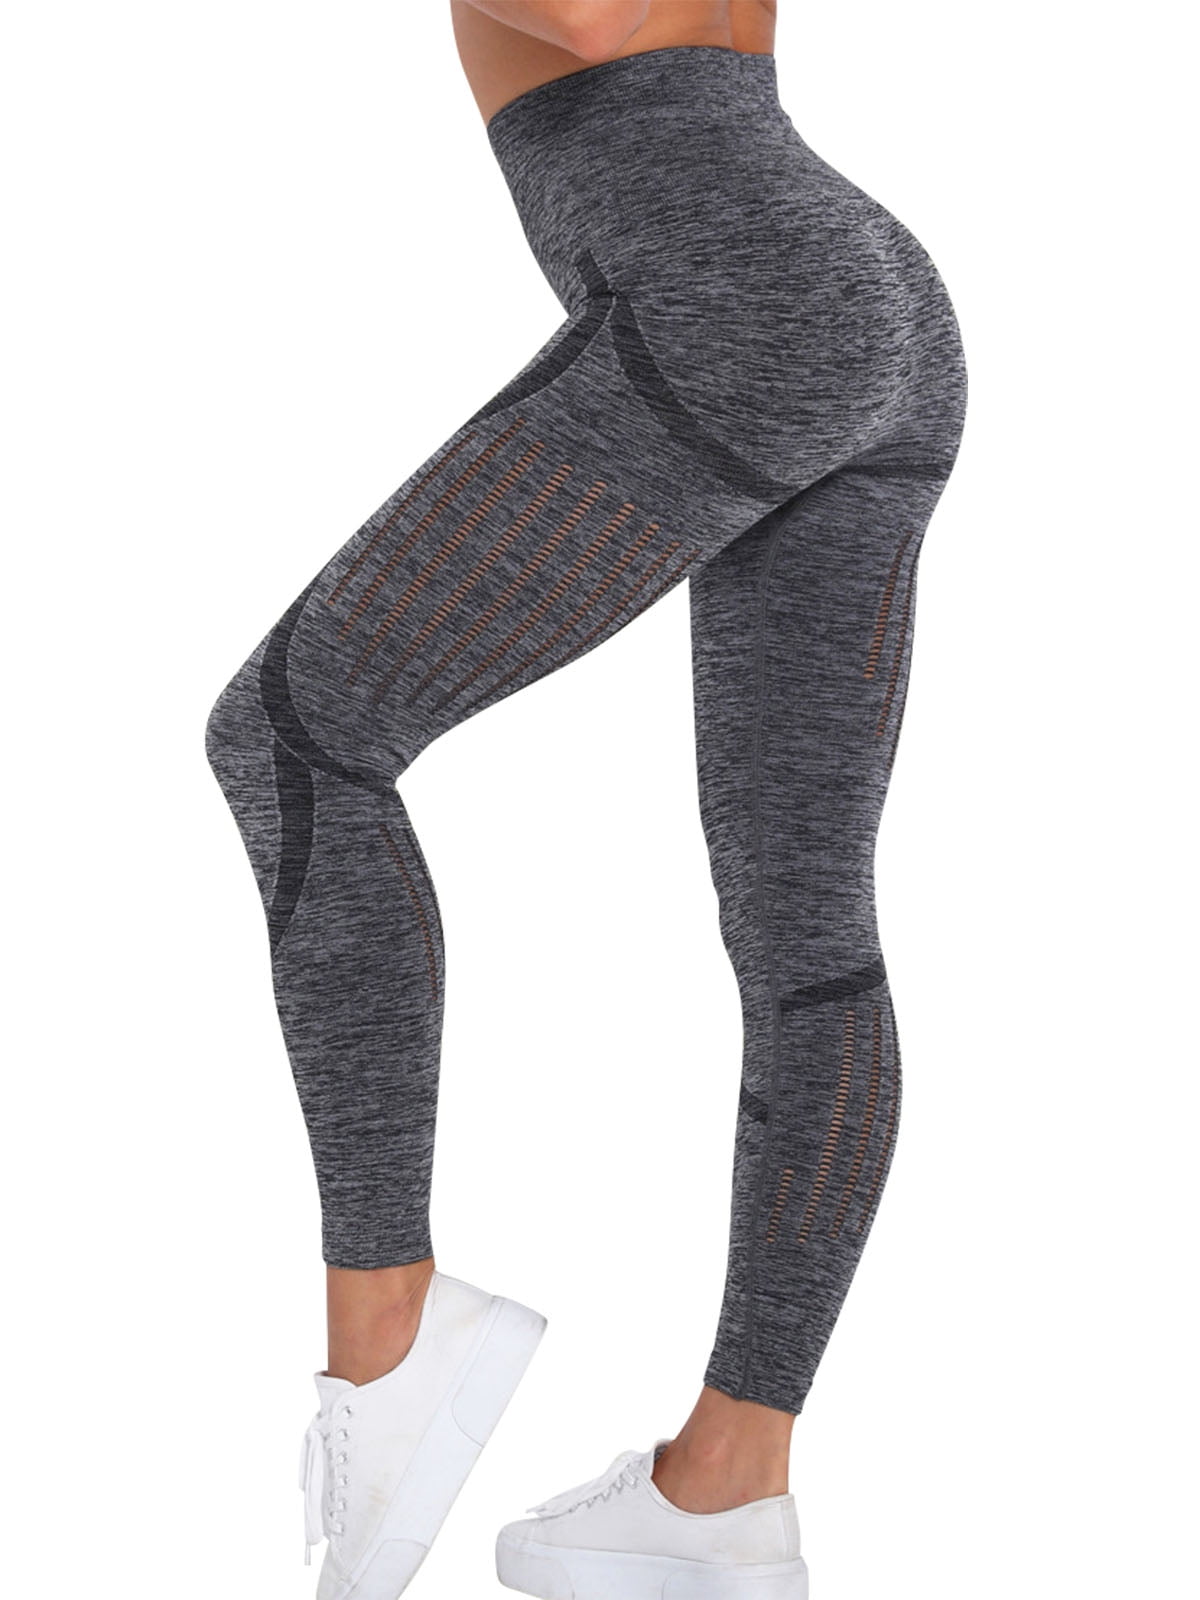 VASLANDA High Waist Seamless Leggings for Women Workout Gym Yoga Pants ...